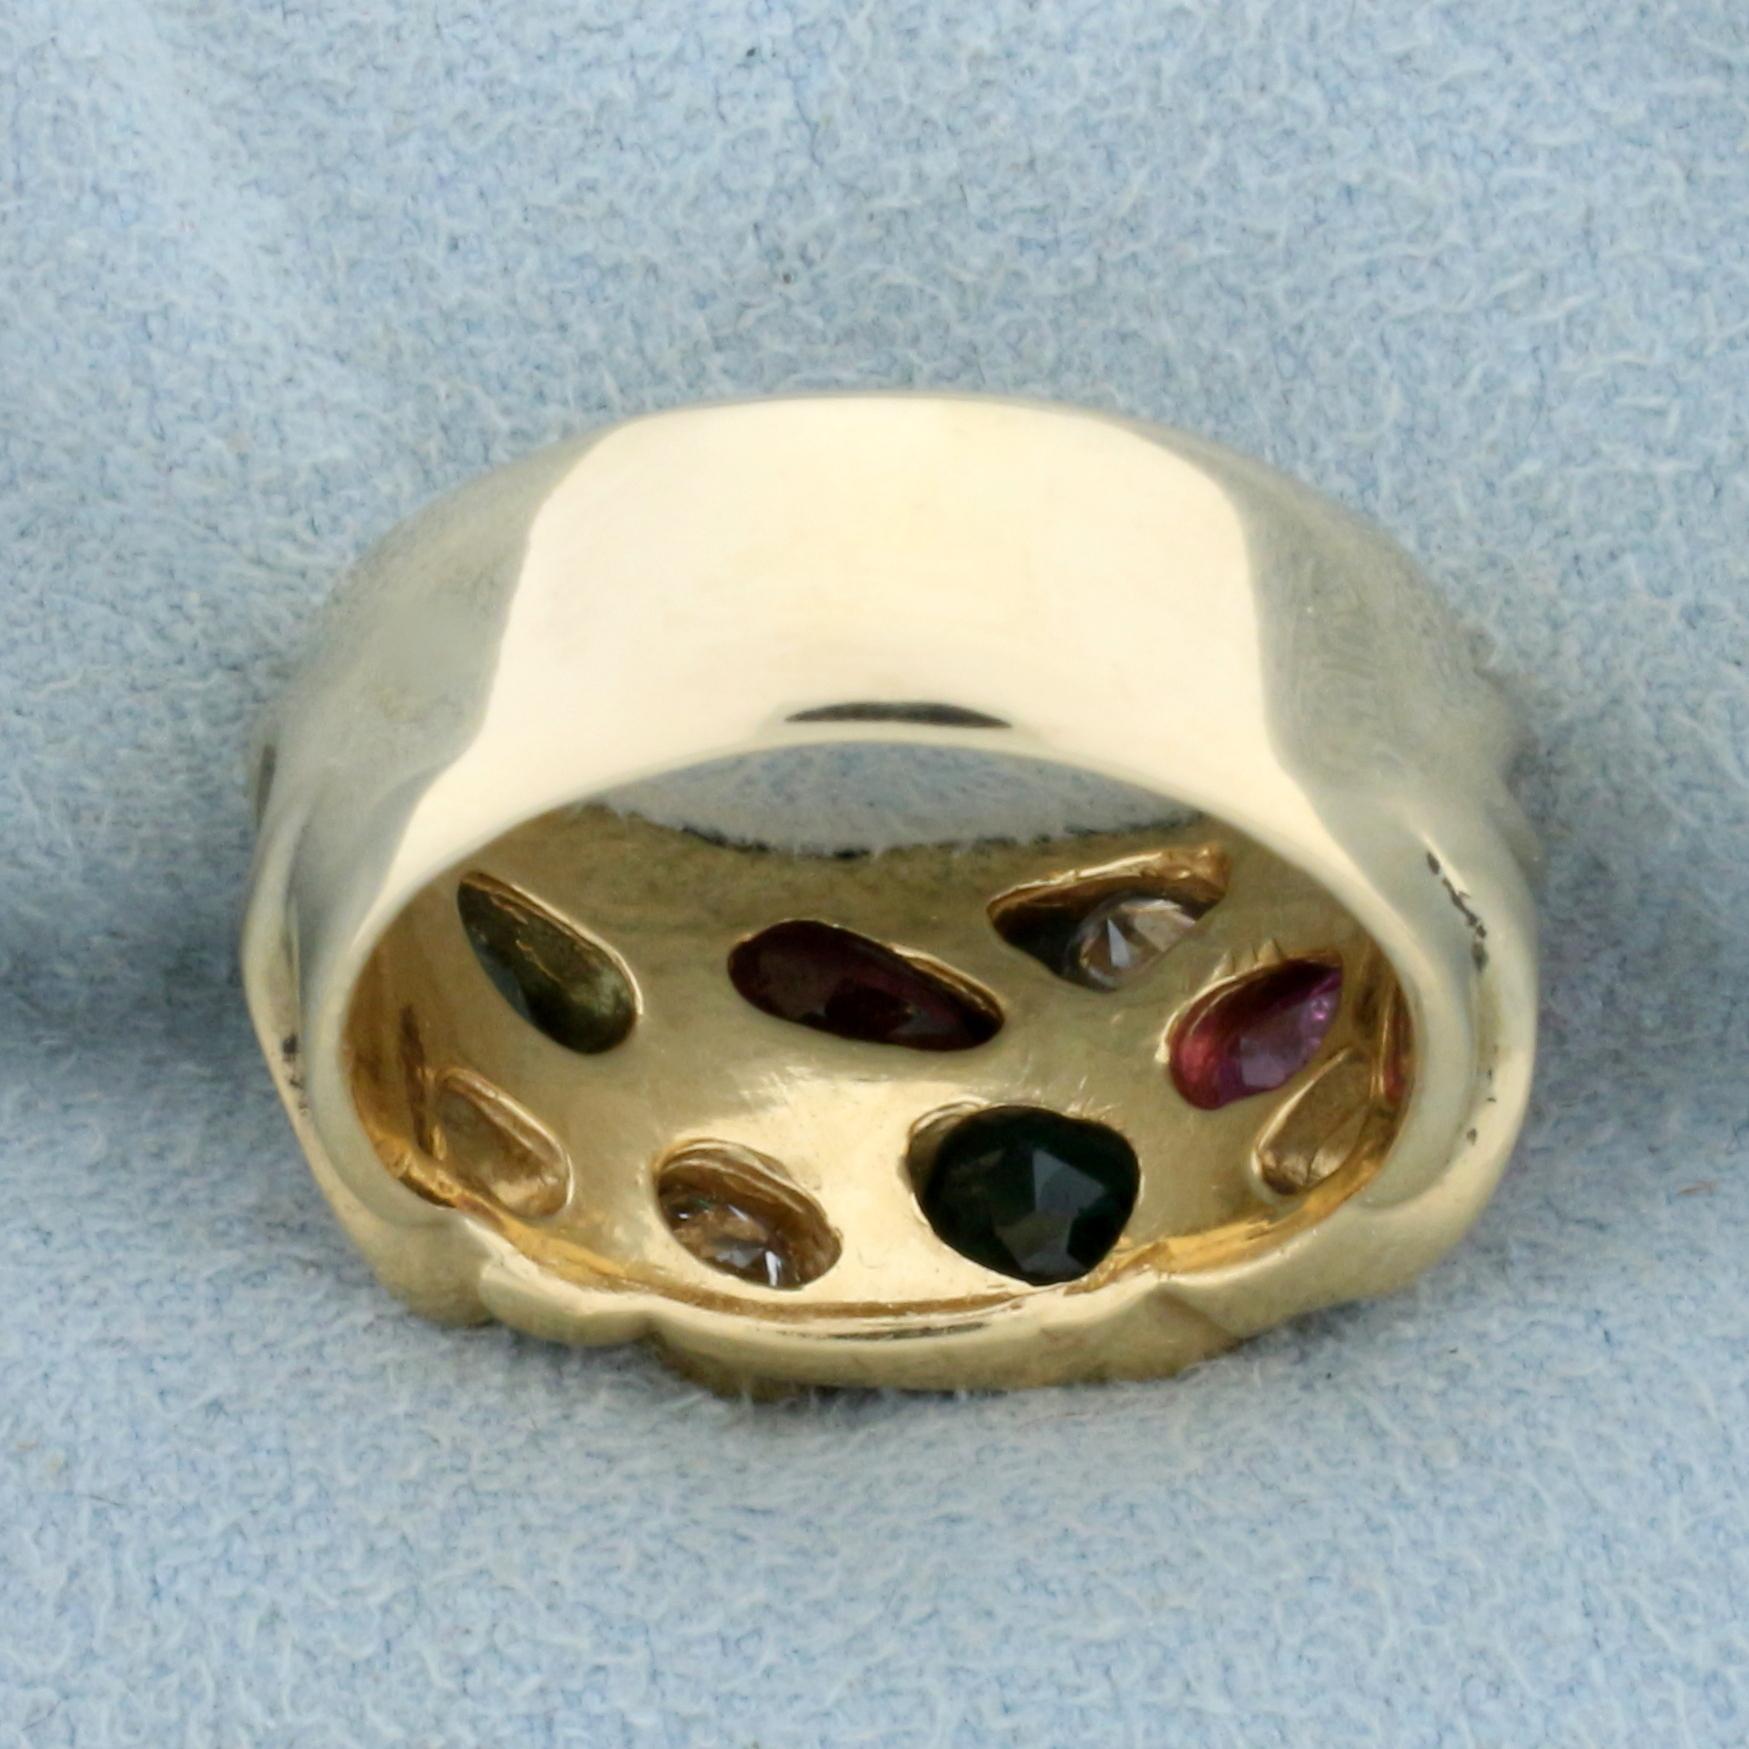 Emerald, Morganite, Diamond, And Rubellite Designer Ring In 14k Yellow Gold